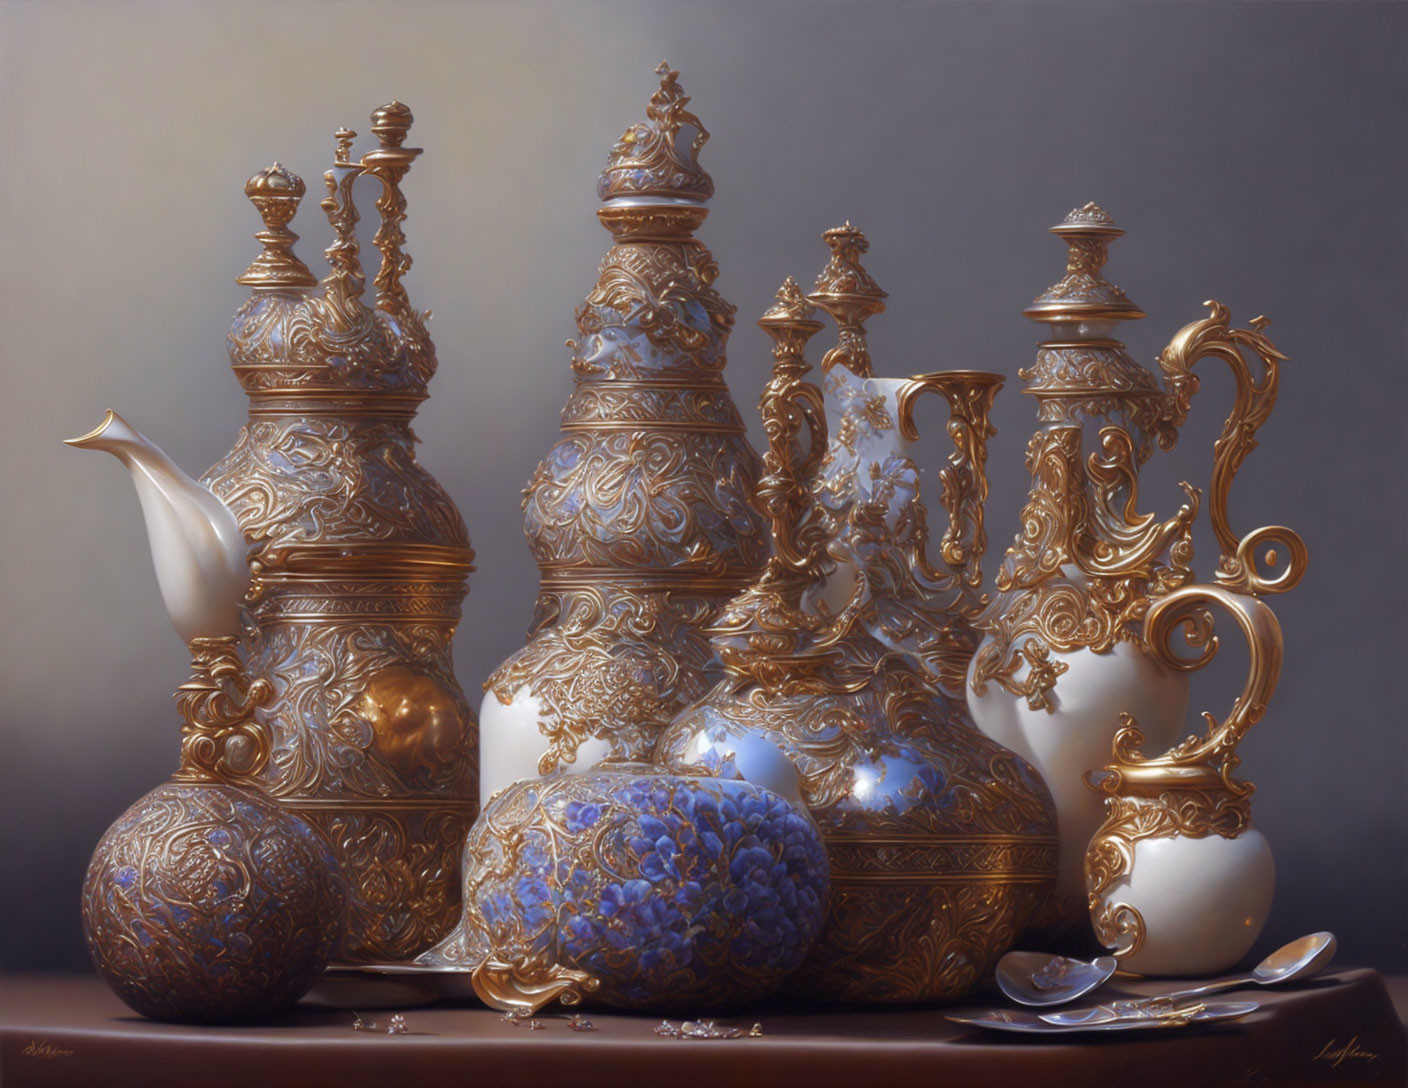 Elegant Golden Tea Set with Intricate Designs